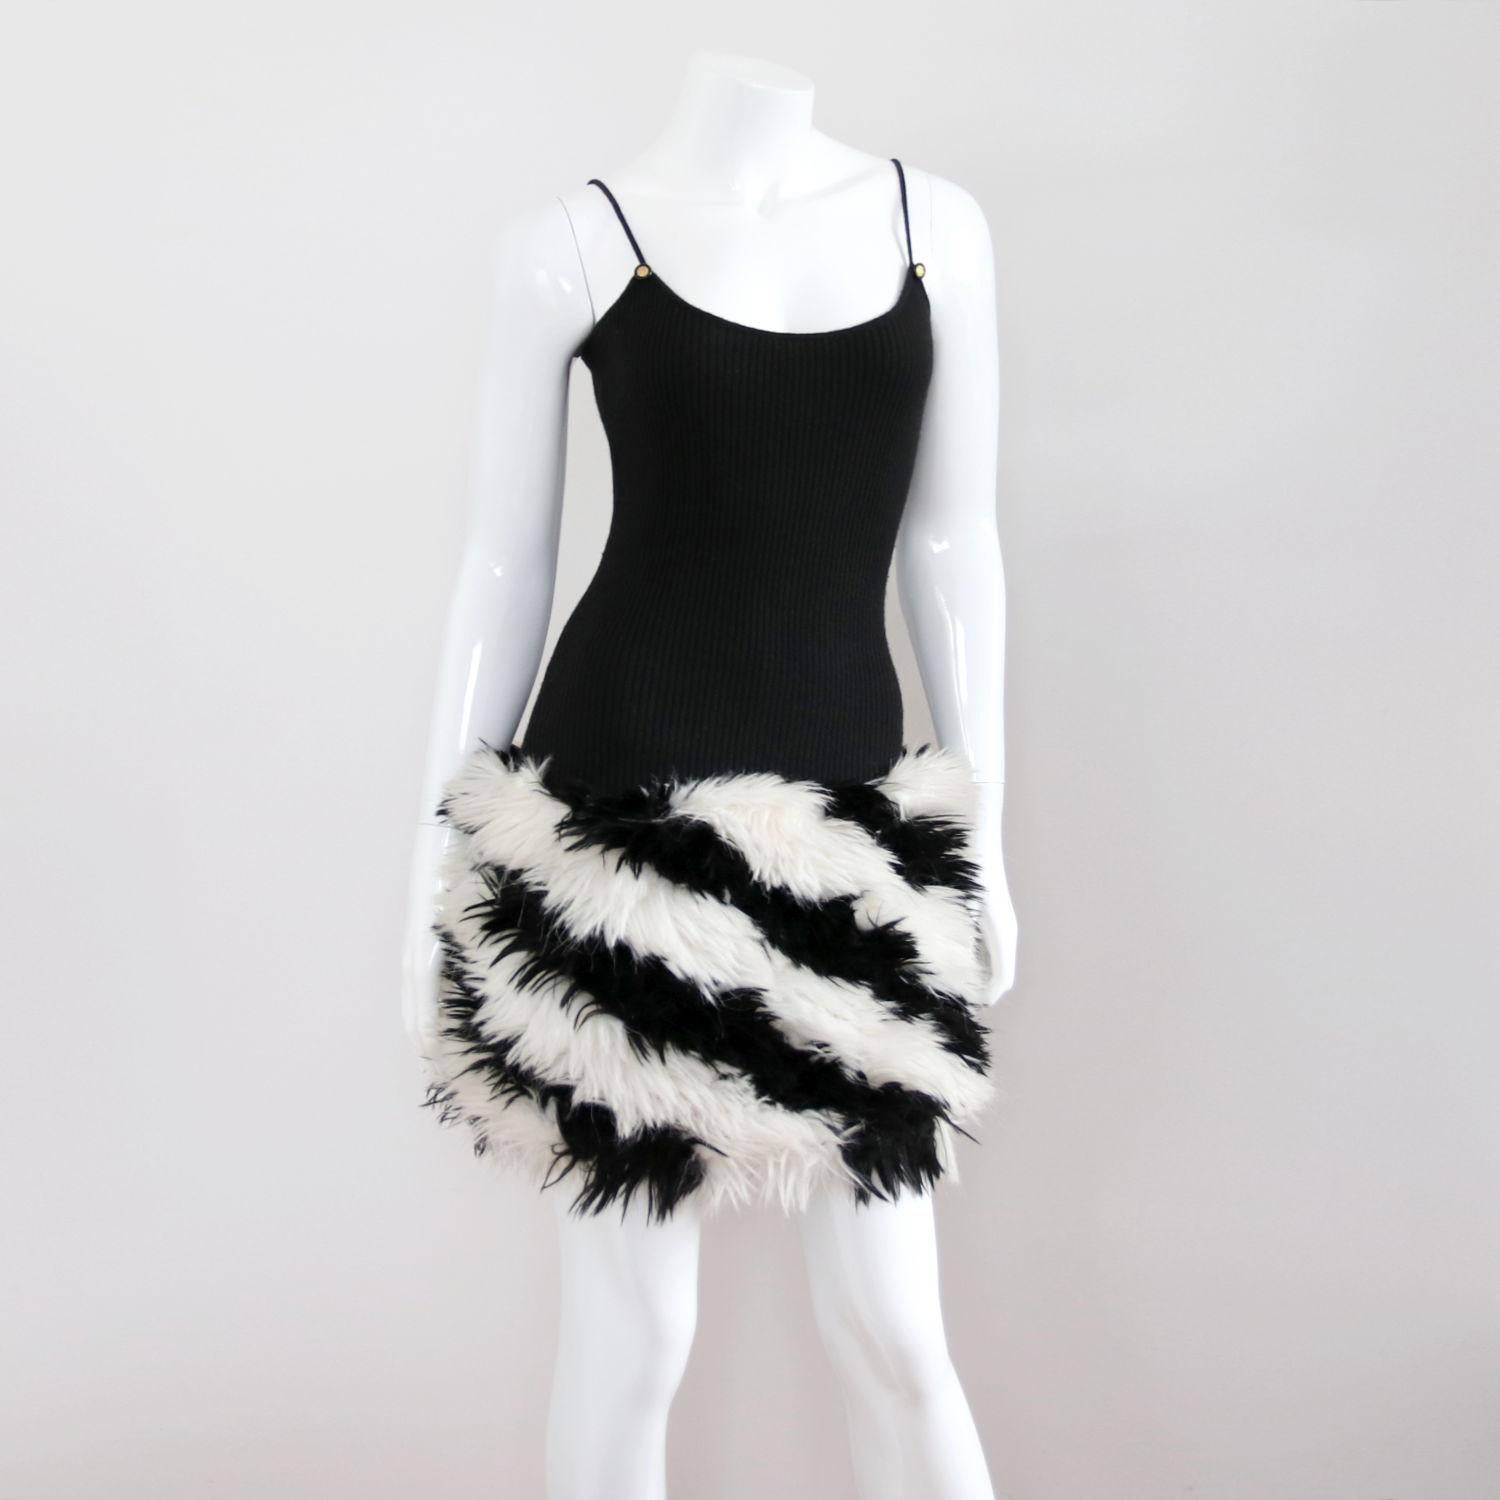 Women's or Men's CHANEL 1994 Legendary Black & White Faux Fur Cashmere Dress by Karl Lagerfeld